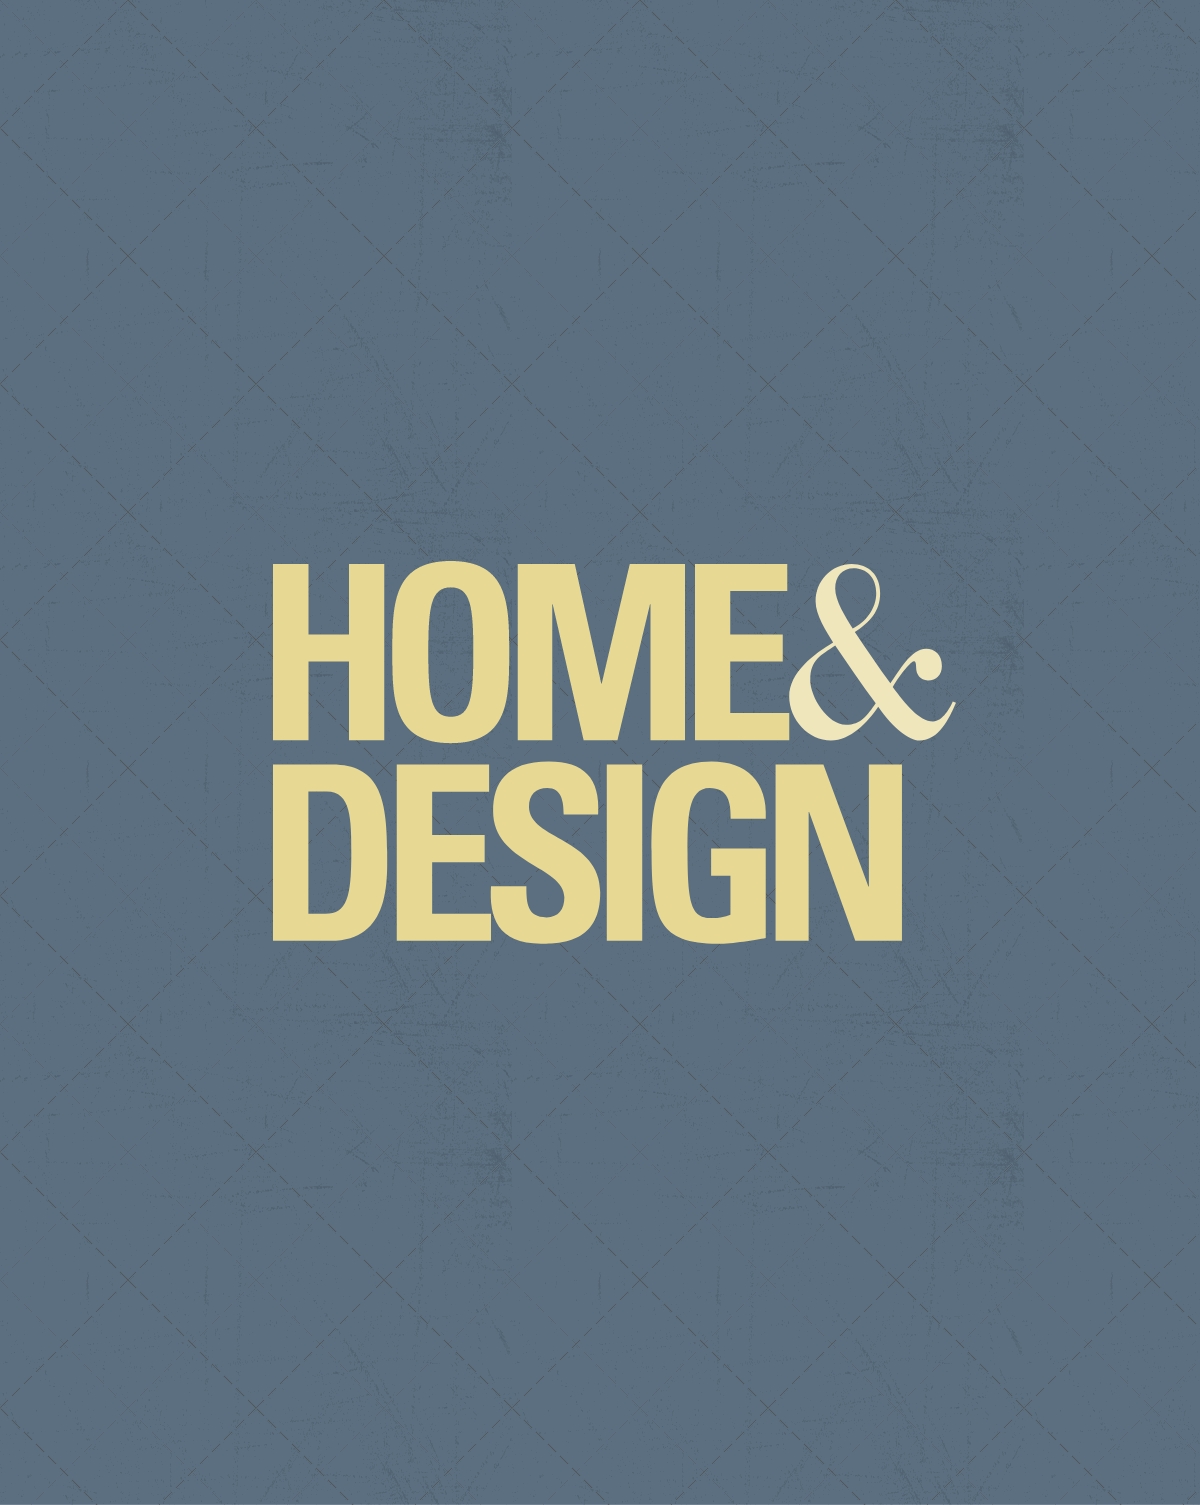 Home and Design Magazine